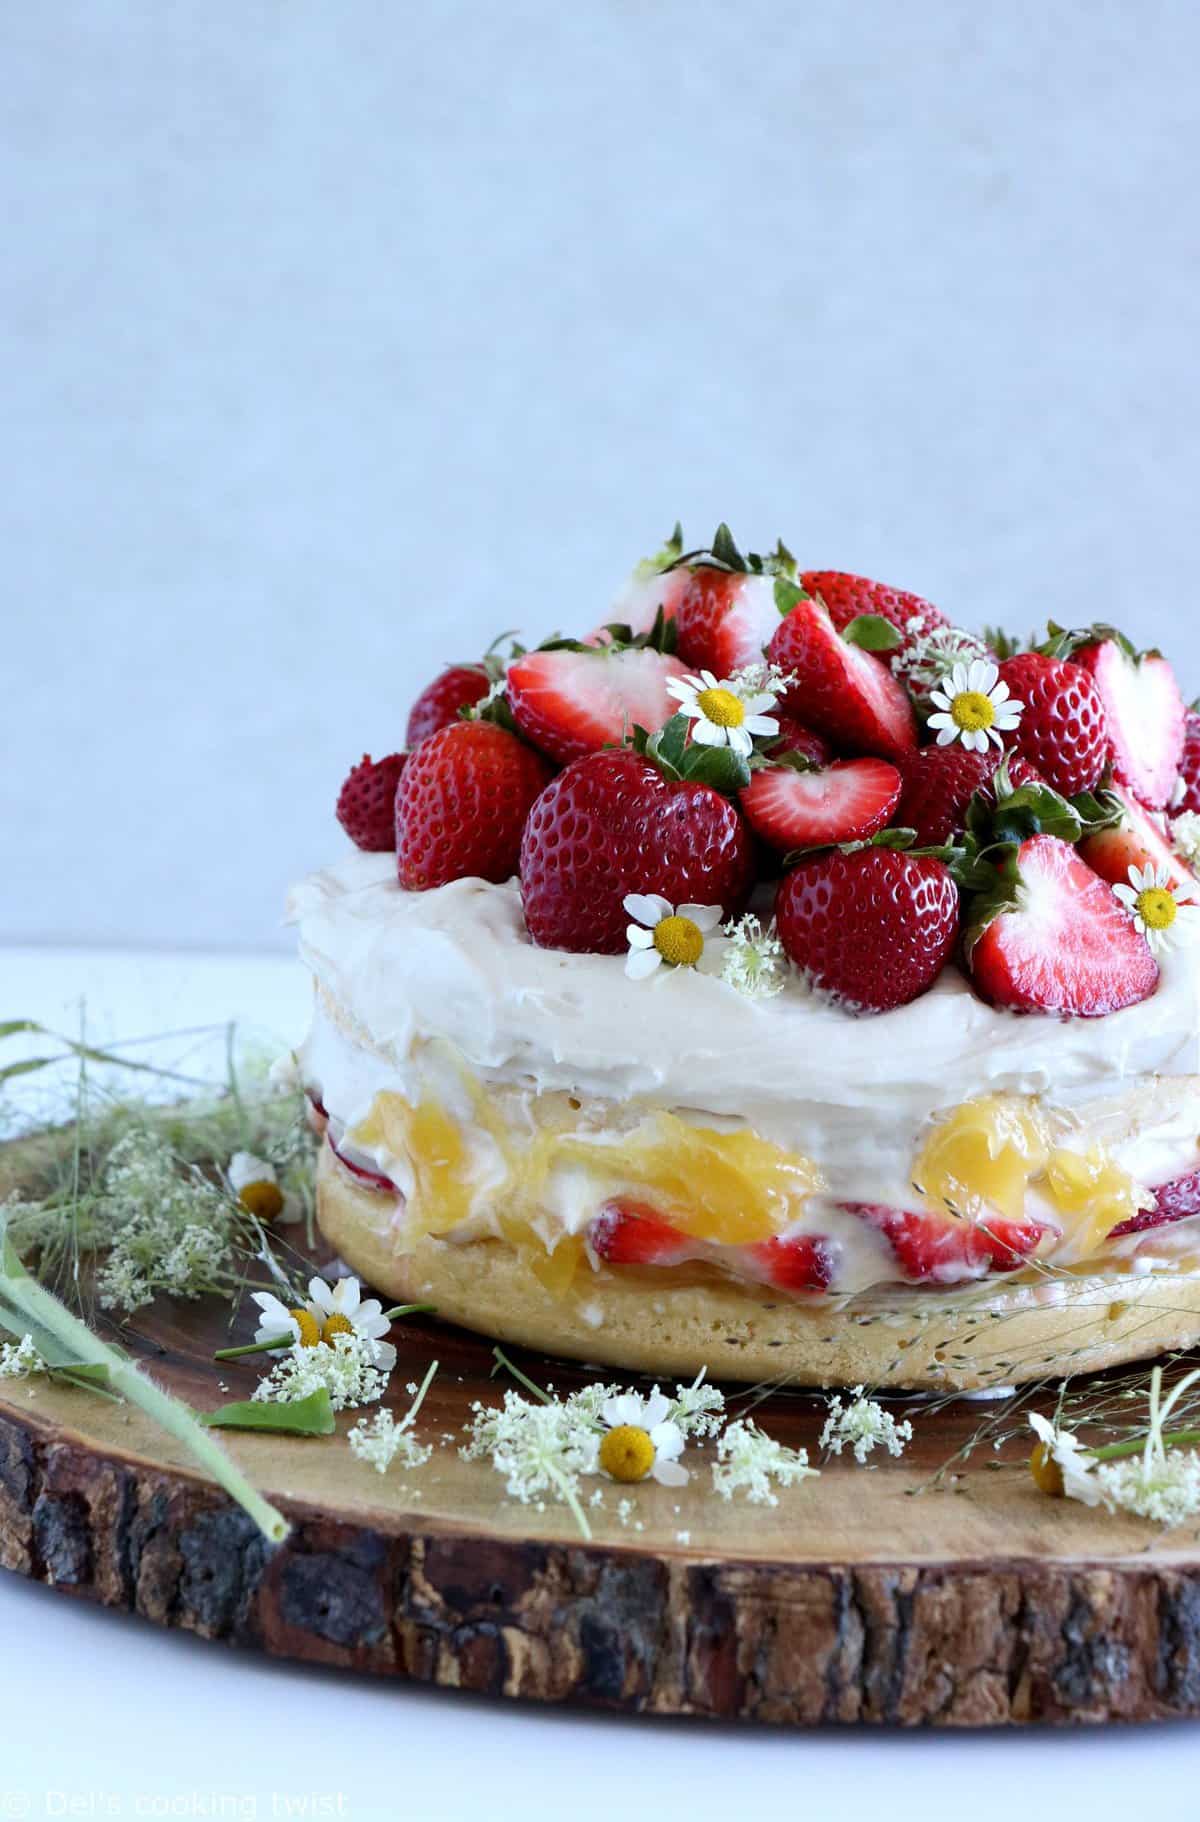 Swedish Midsummer Strawberry Cake (Midsommartårta)